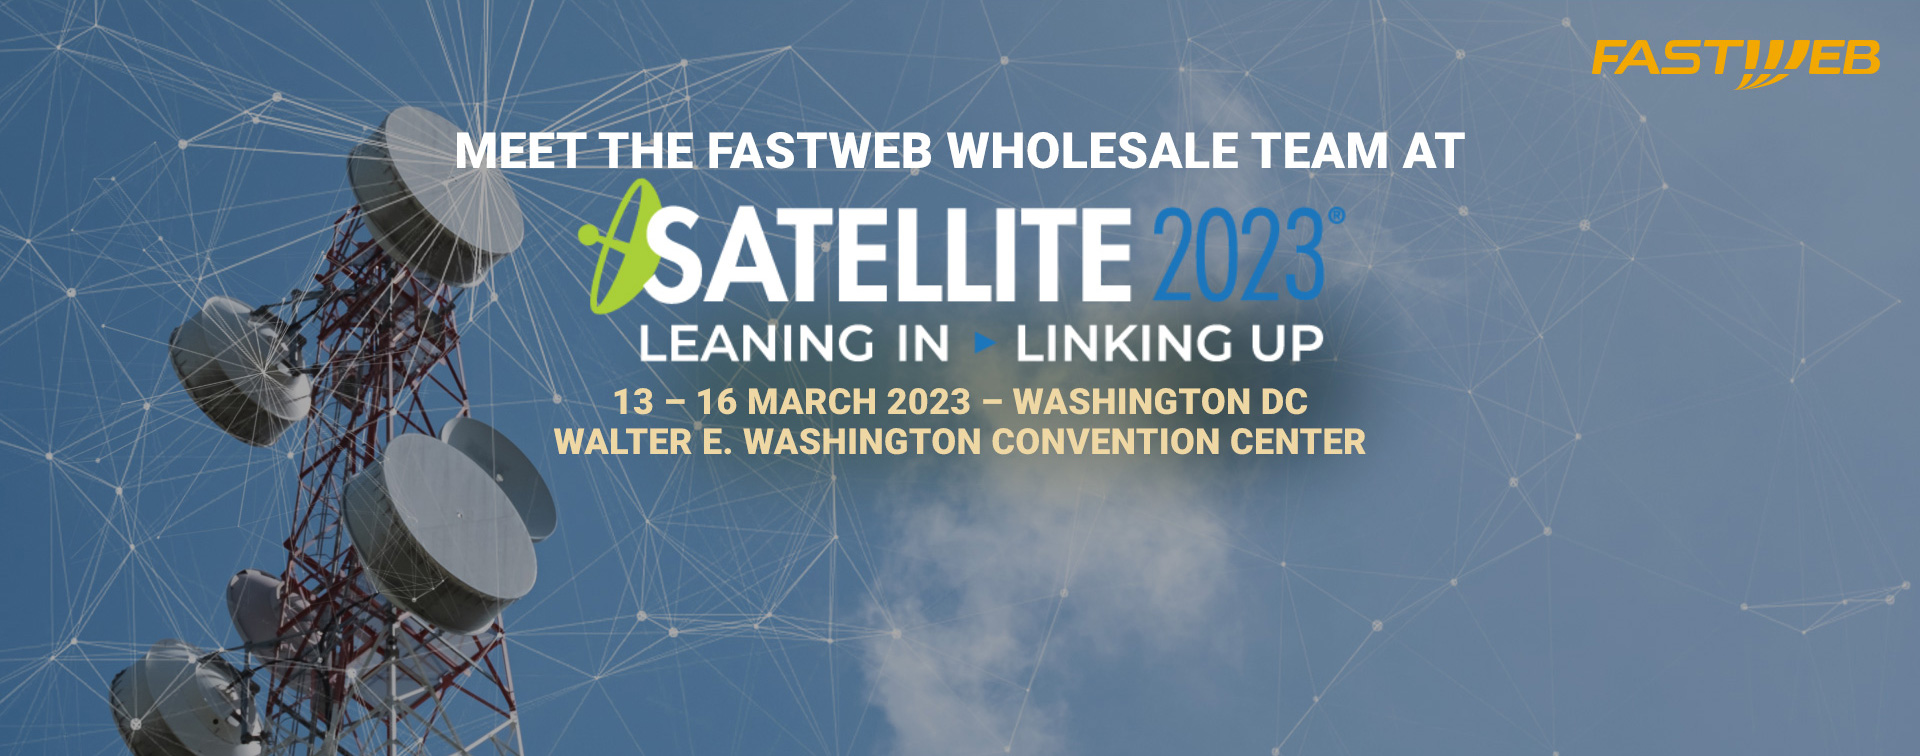 Meet the Fastweb Wholesale Team at Satellite 2023